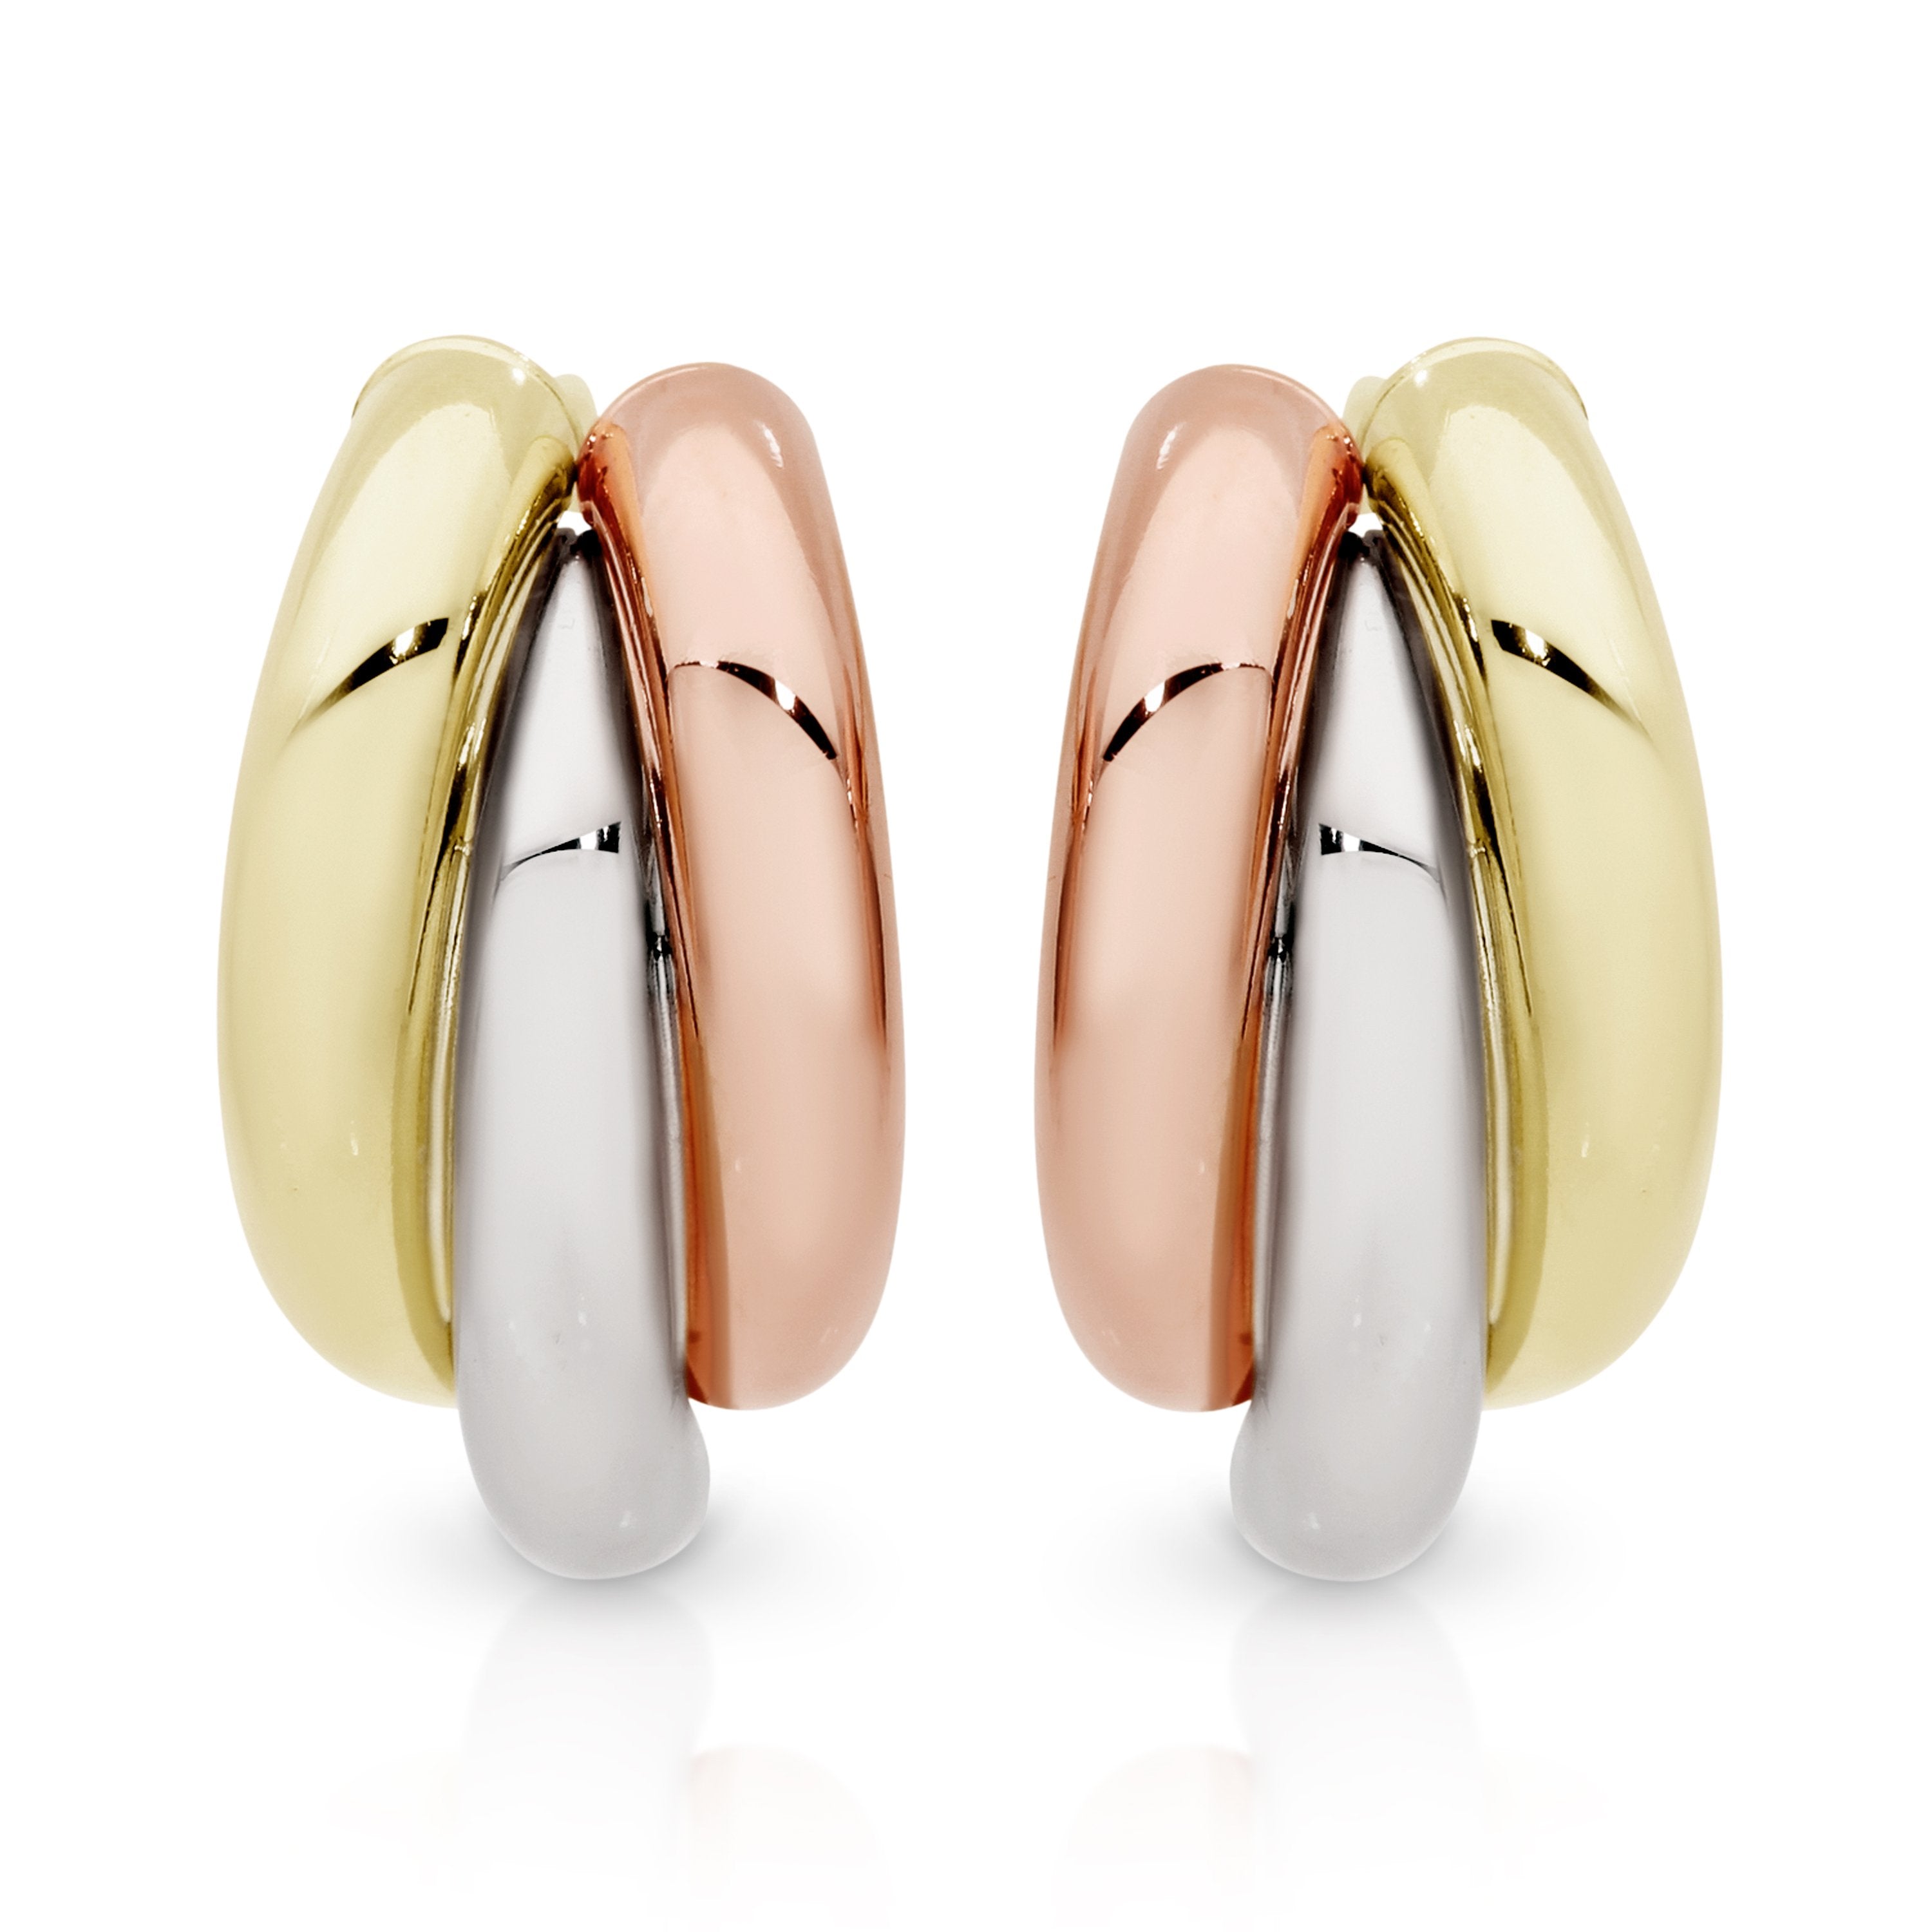 9ct gold 3 tone stud earrings